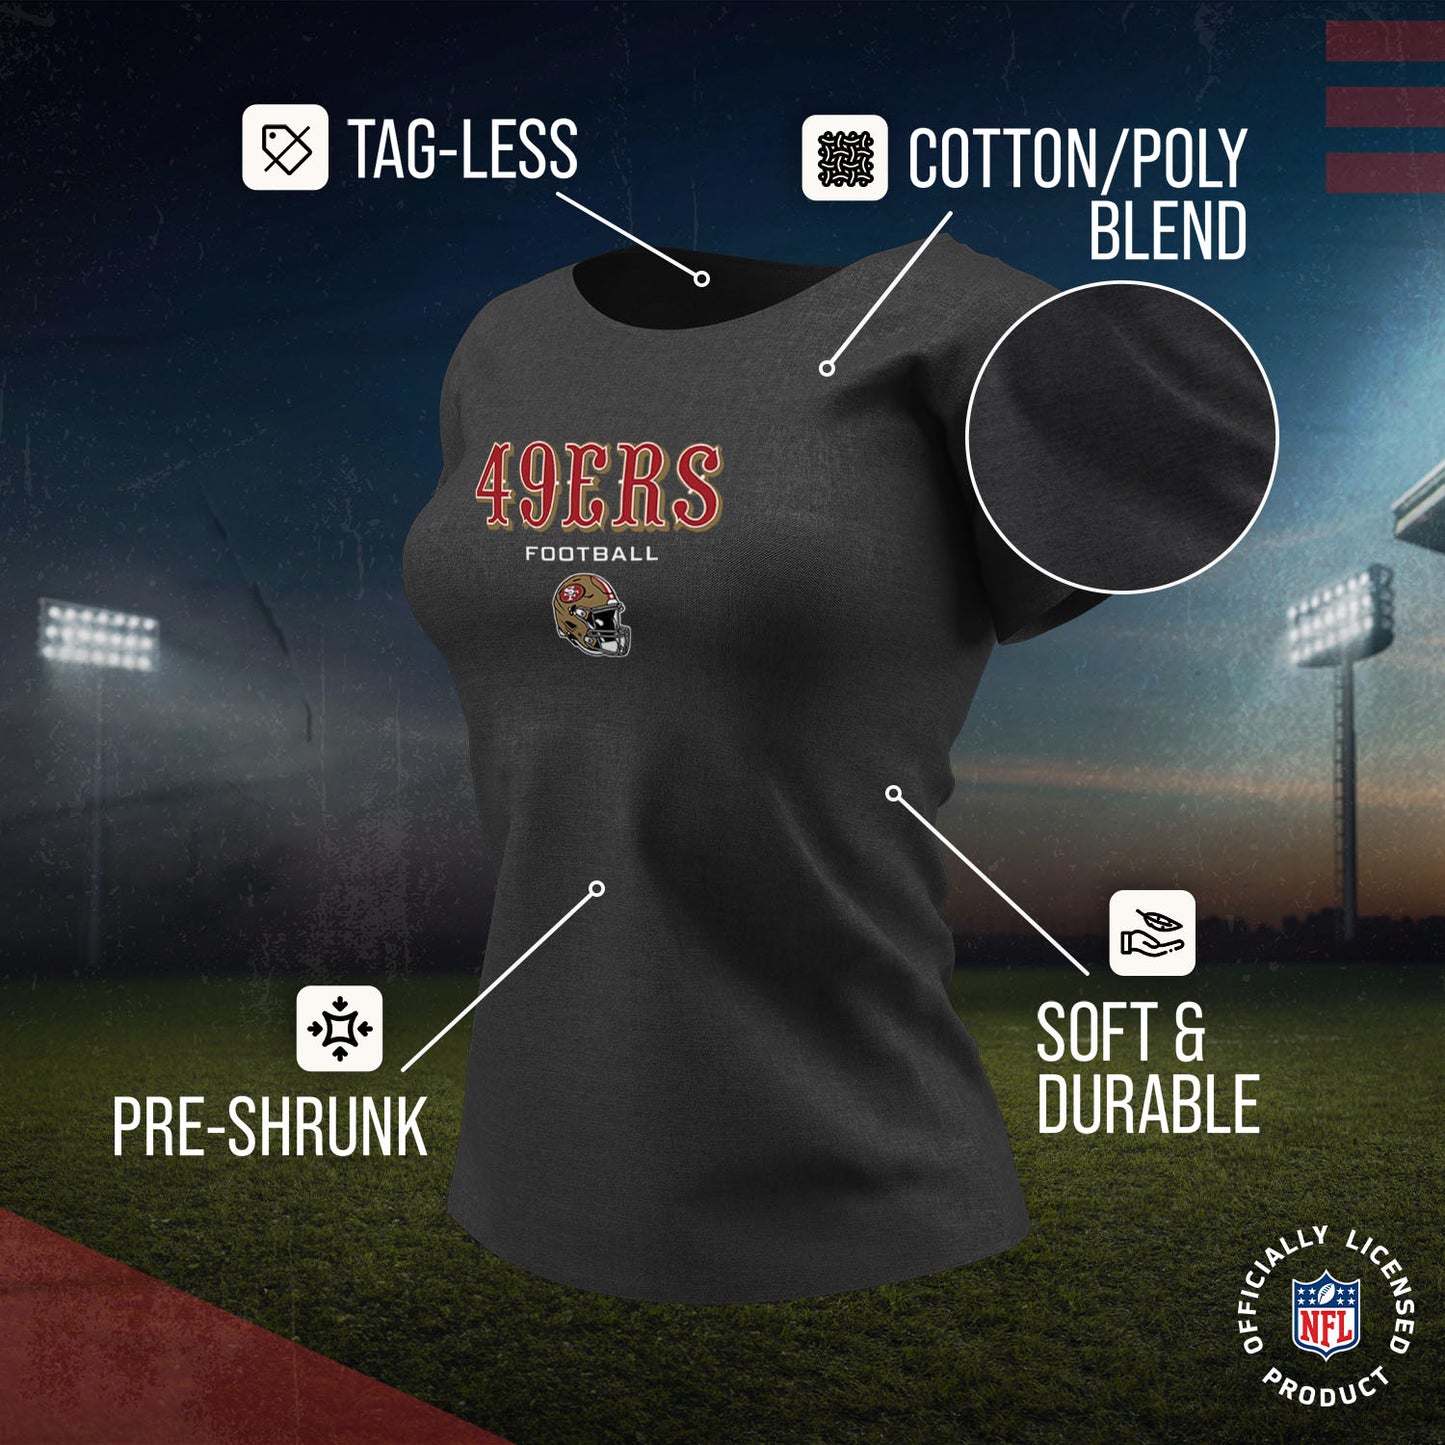 San Francisco 49ers Women's NFL Football Helmet Short Sleeve Tagless T-Shirt - Charcoal